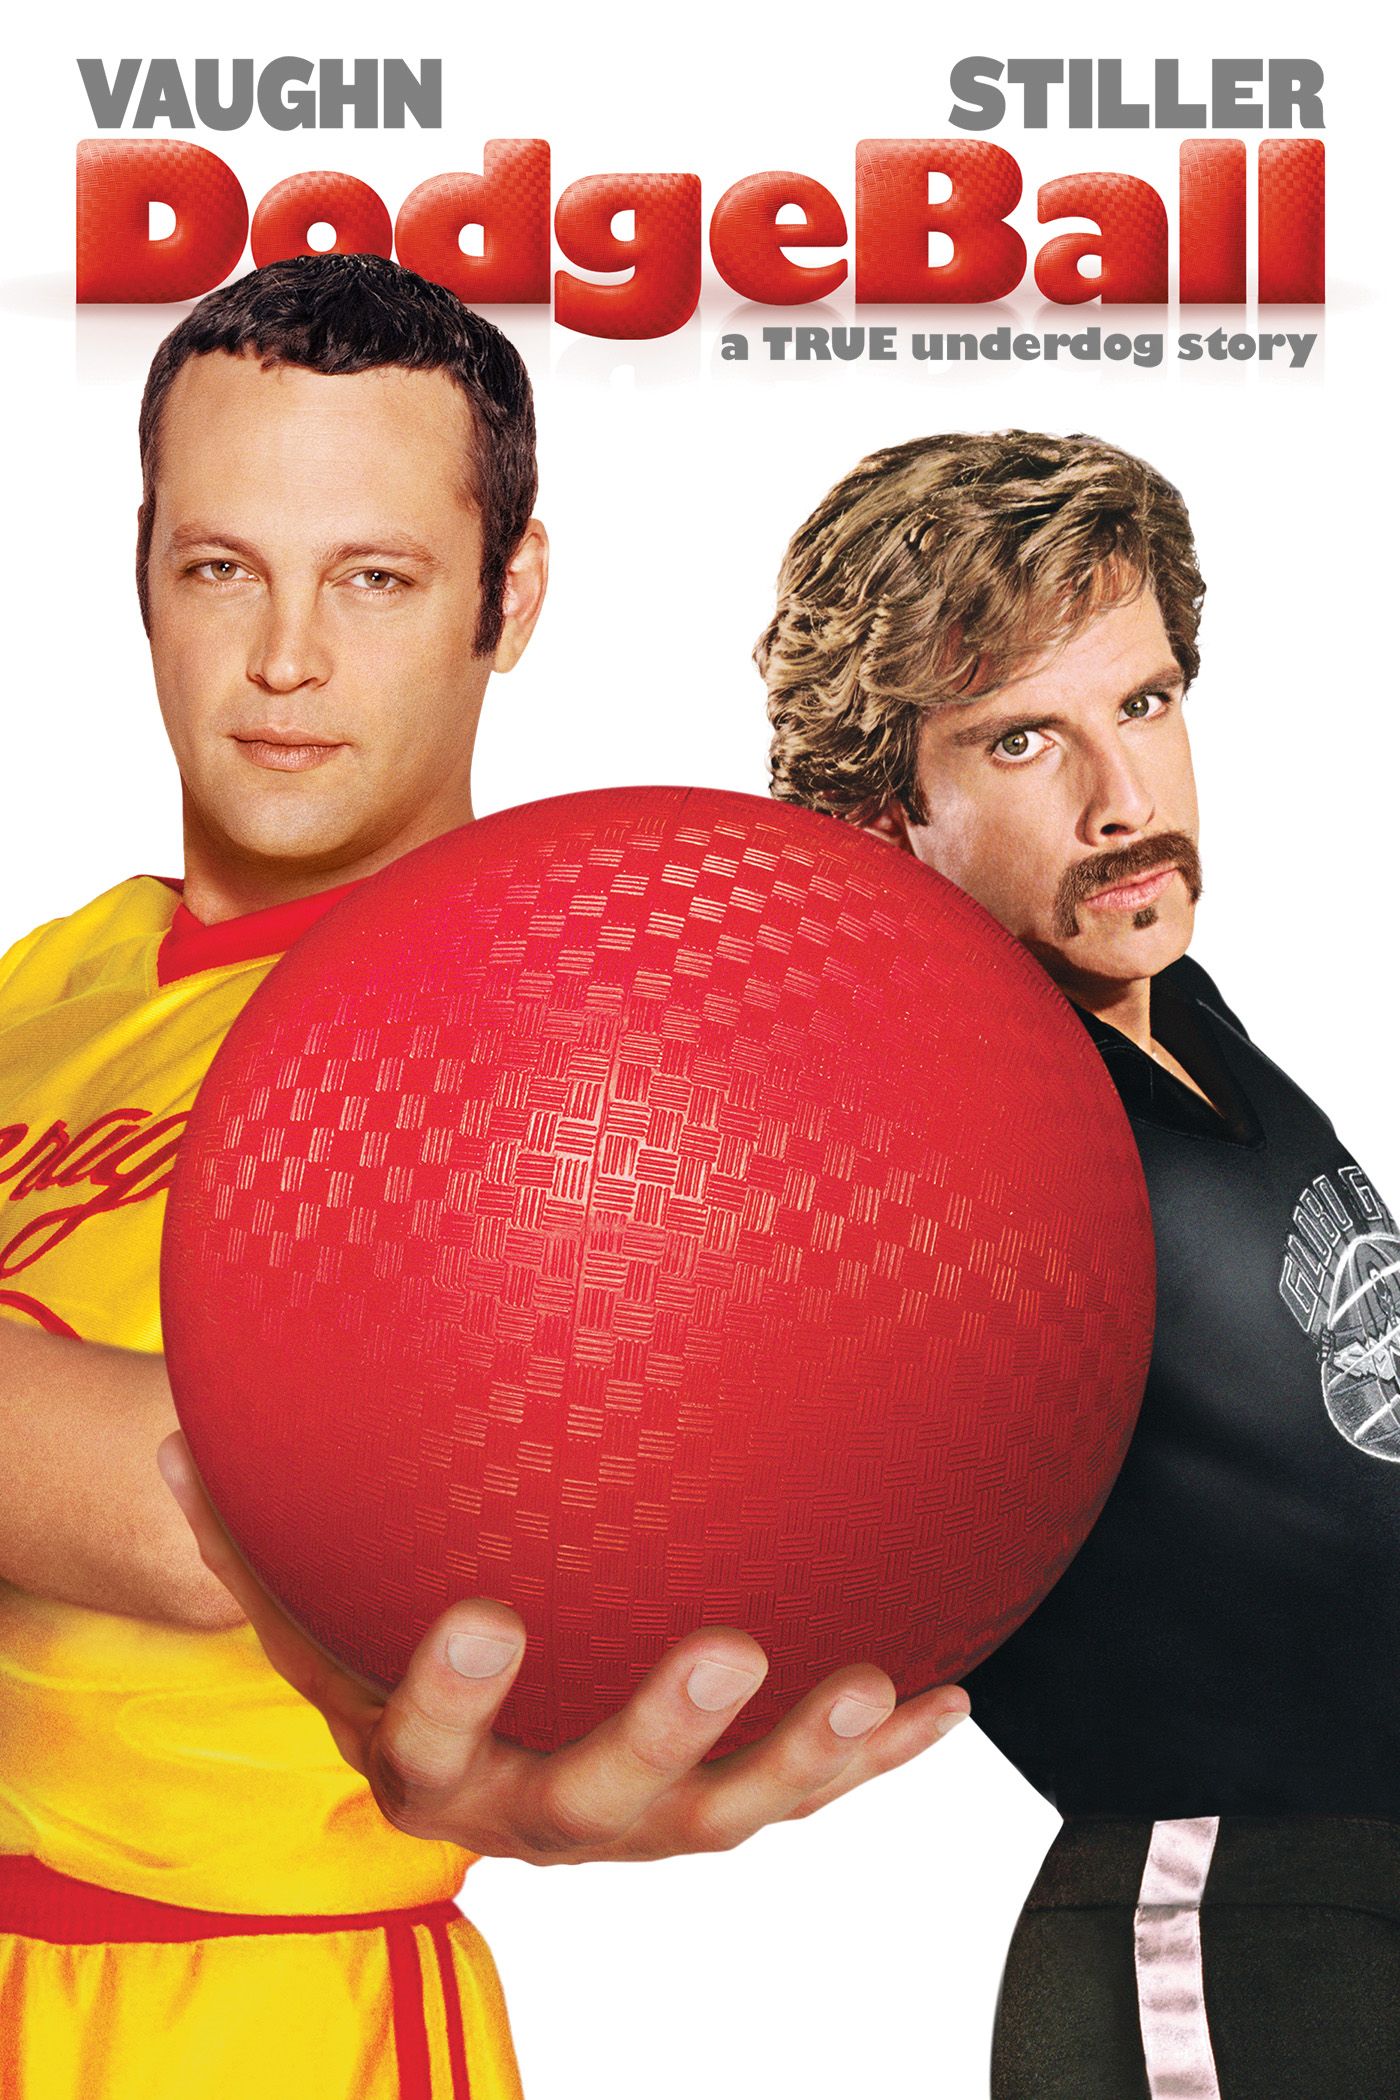 Dodgeball: A True Underdog Story (2004)